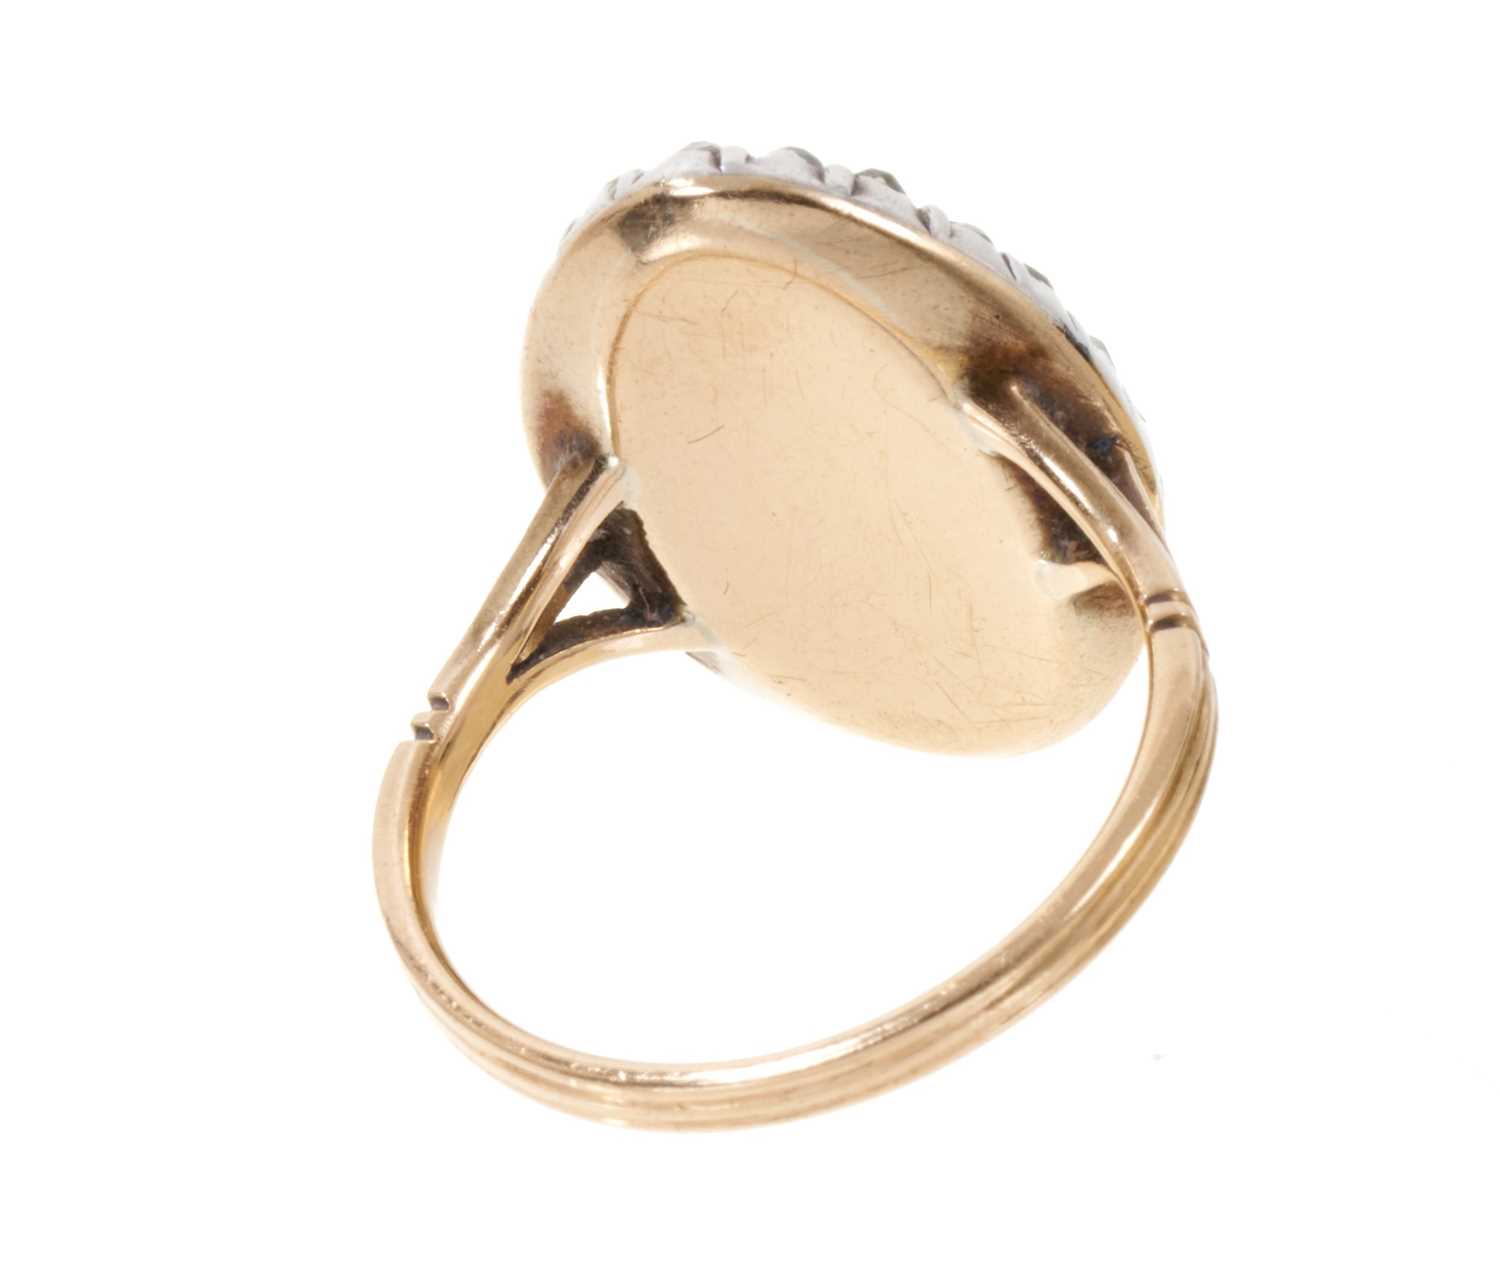 George III diamond and enamel navette form ring - Image 3 of 3